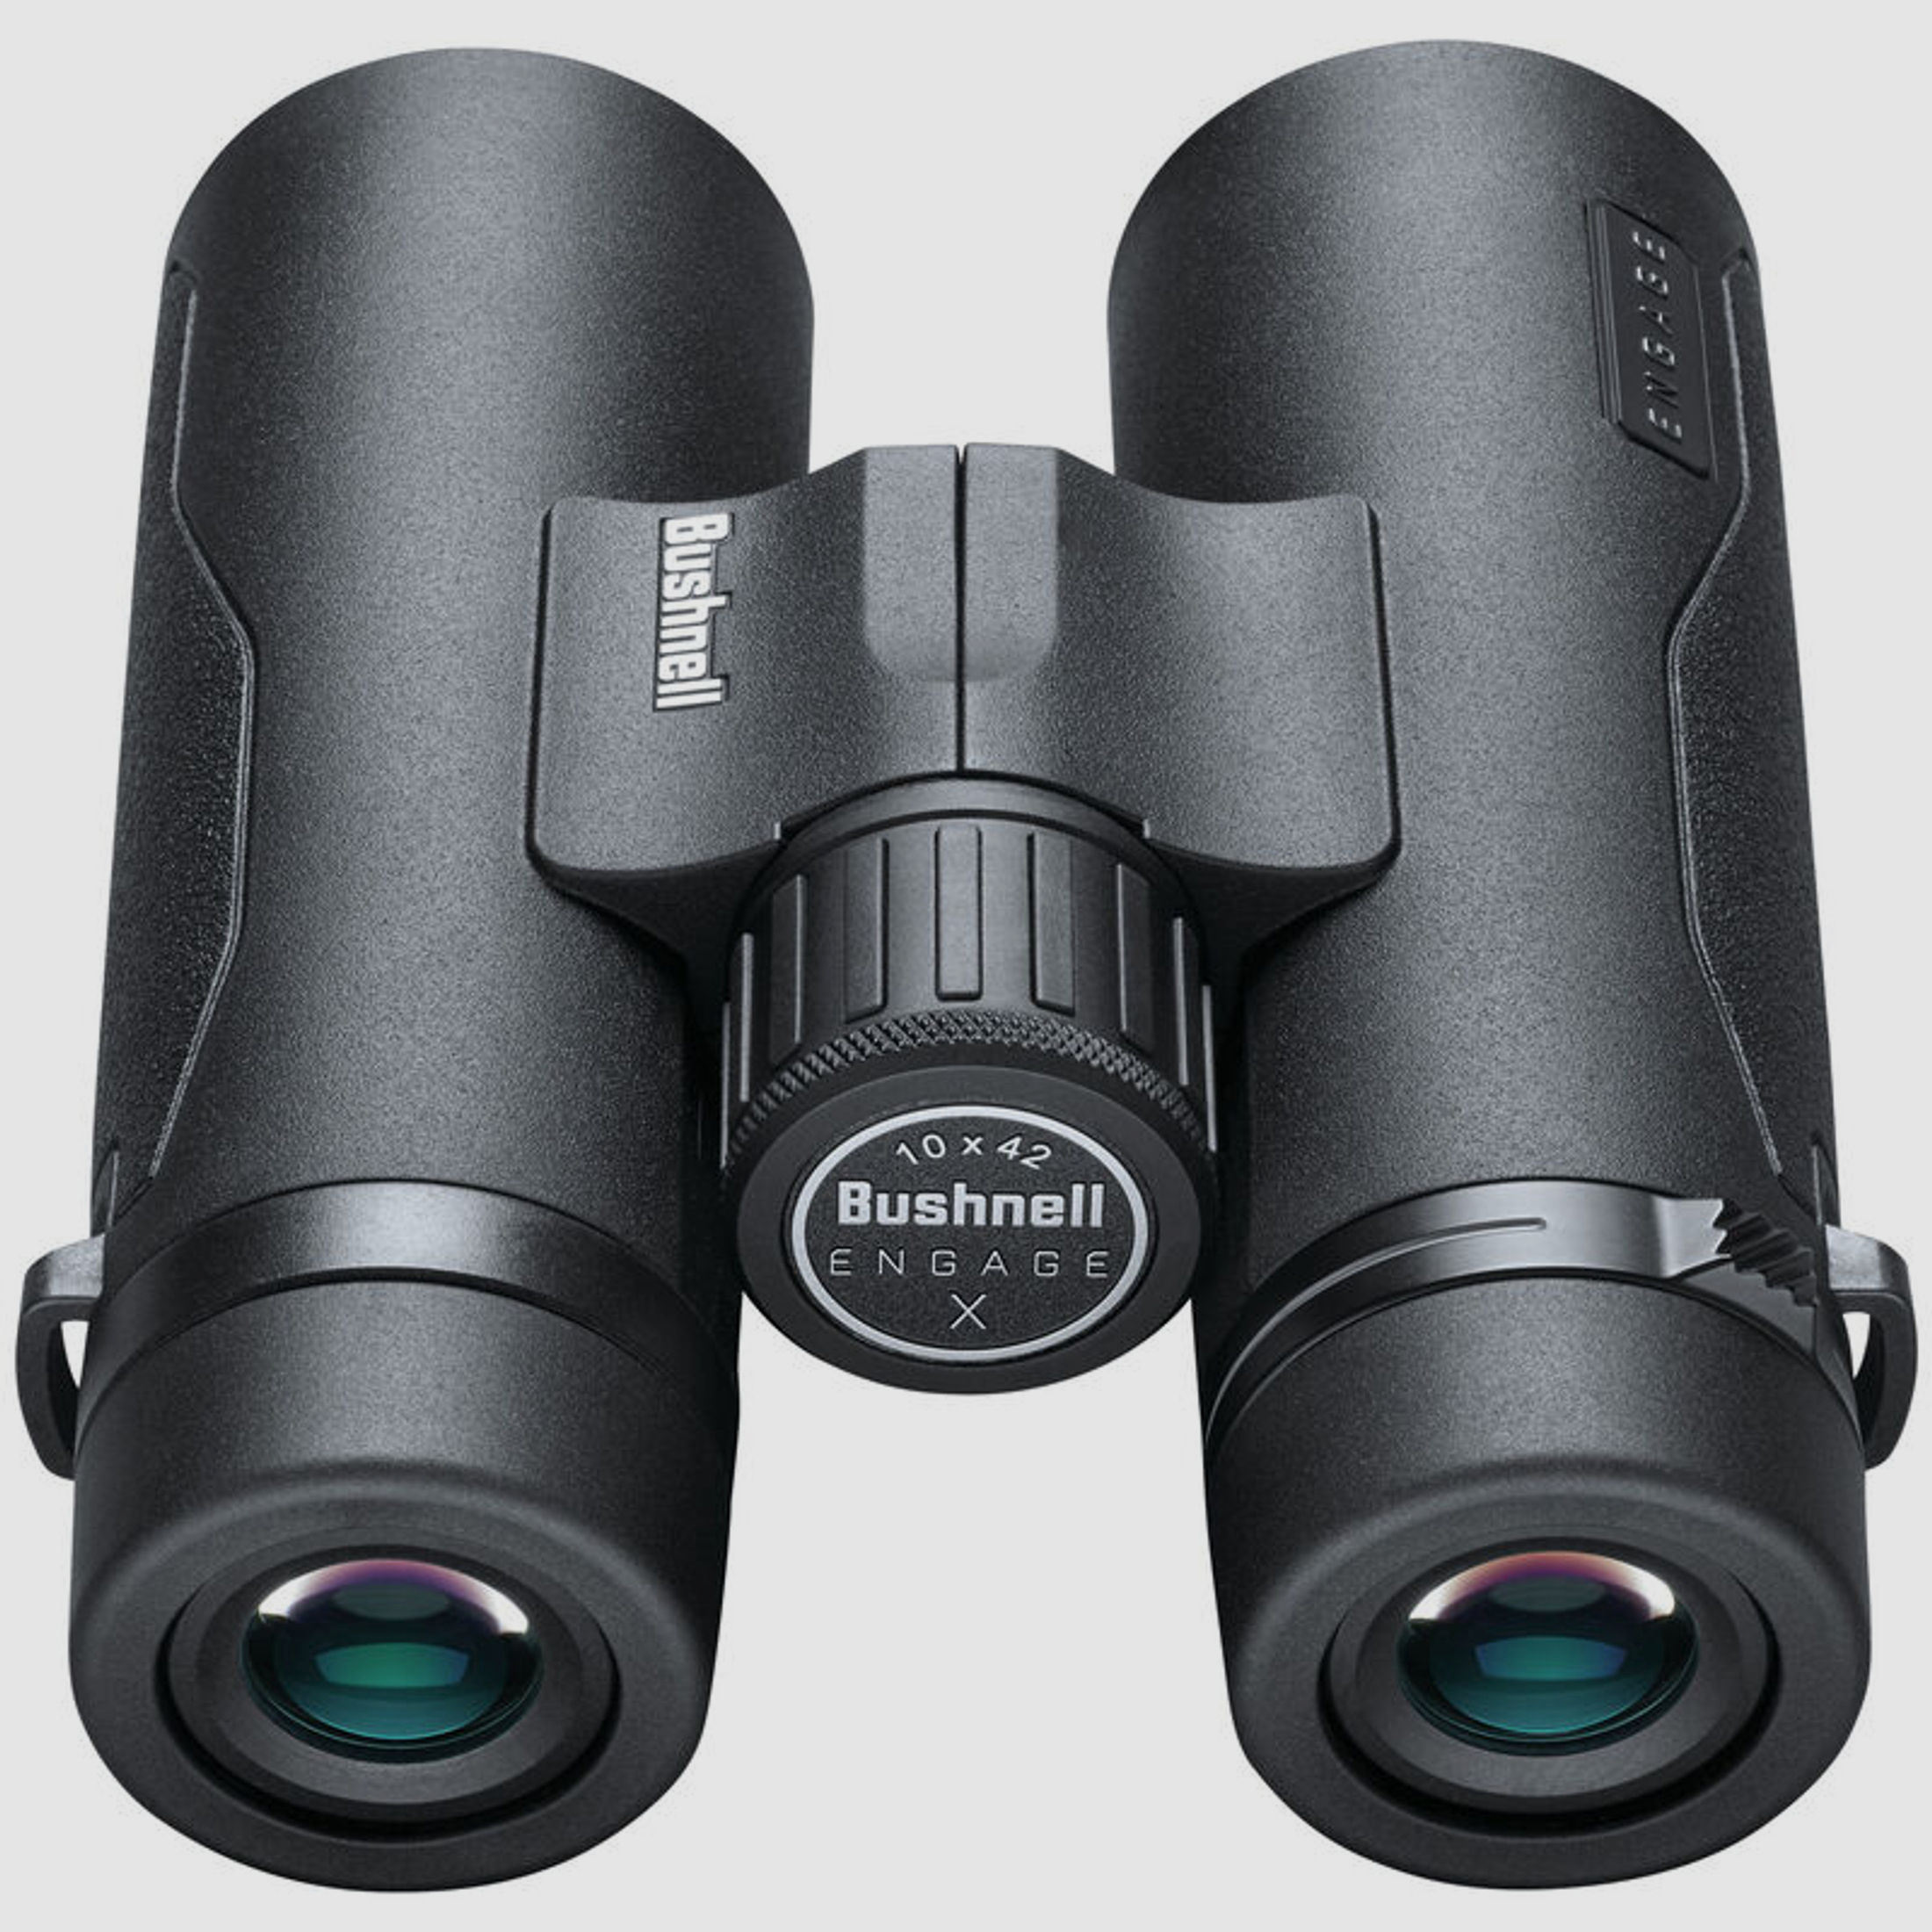 Bushnell Fernglas Engage 'X' 10x42mm, schwarz, EDX, FMC, bleifrei